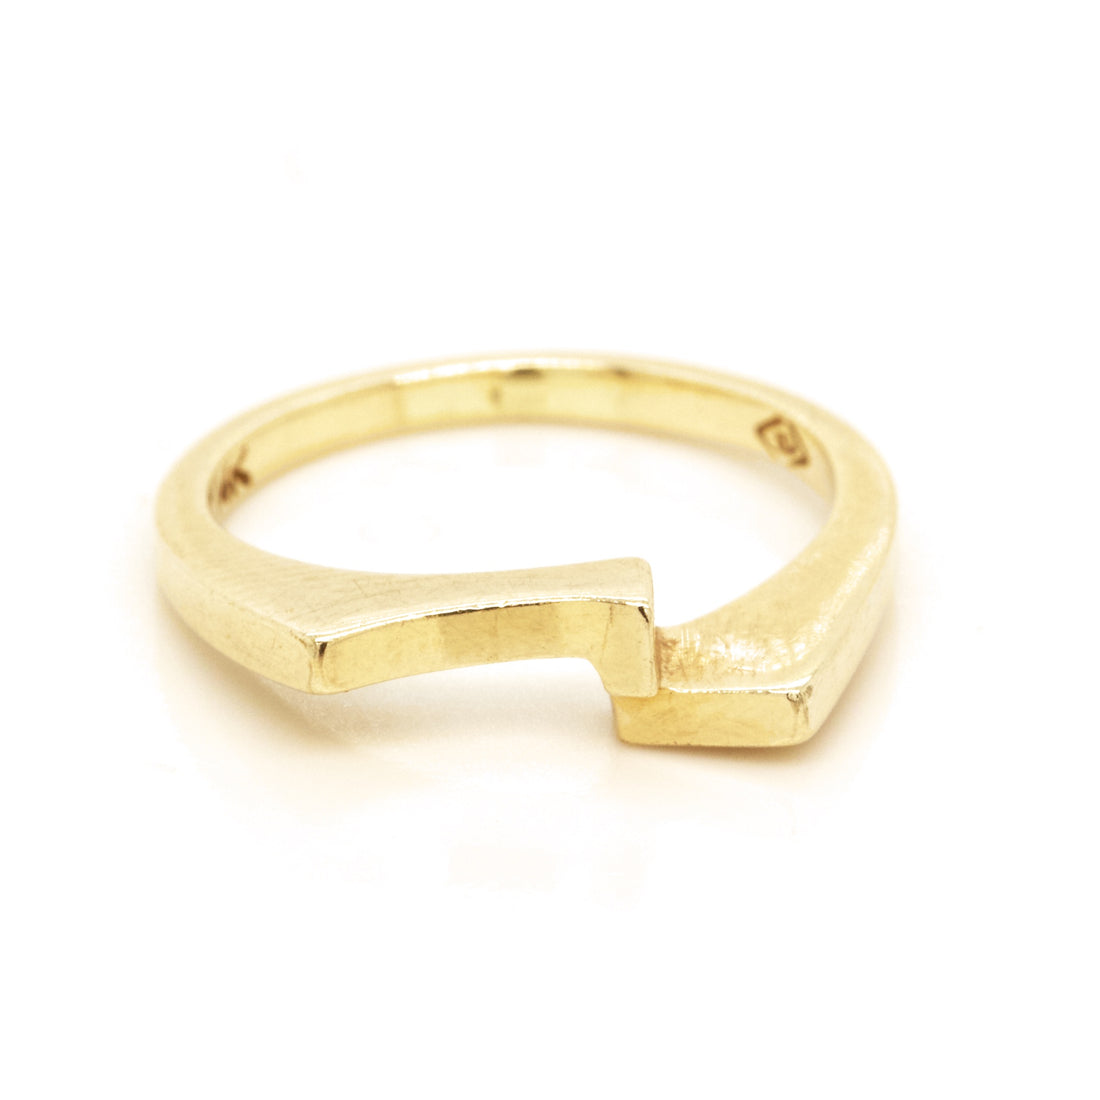 14k Yellow Gold Diamond Engagement Ring Set